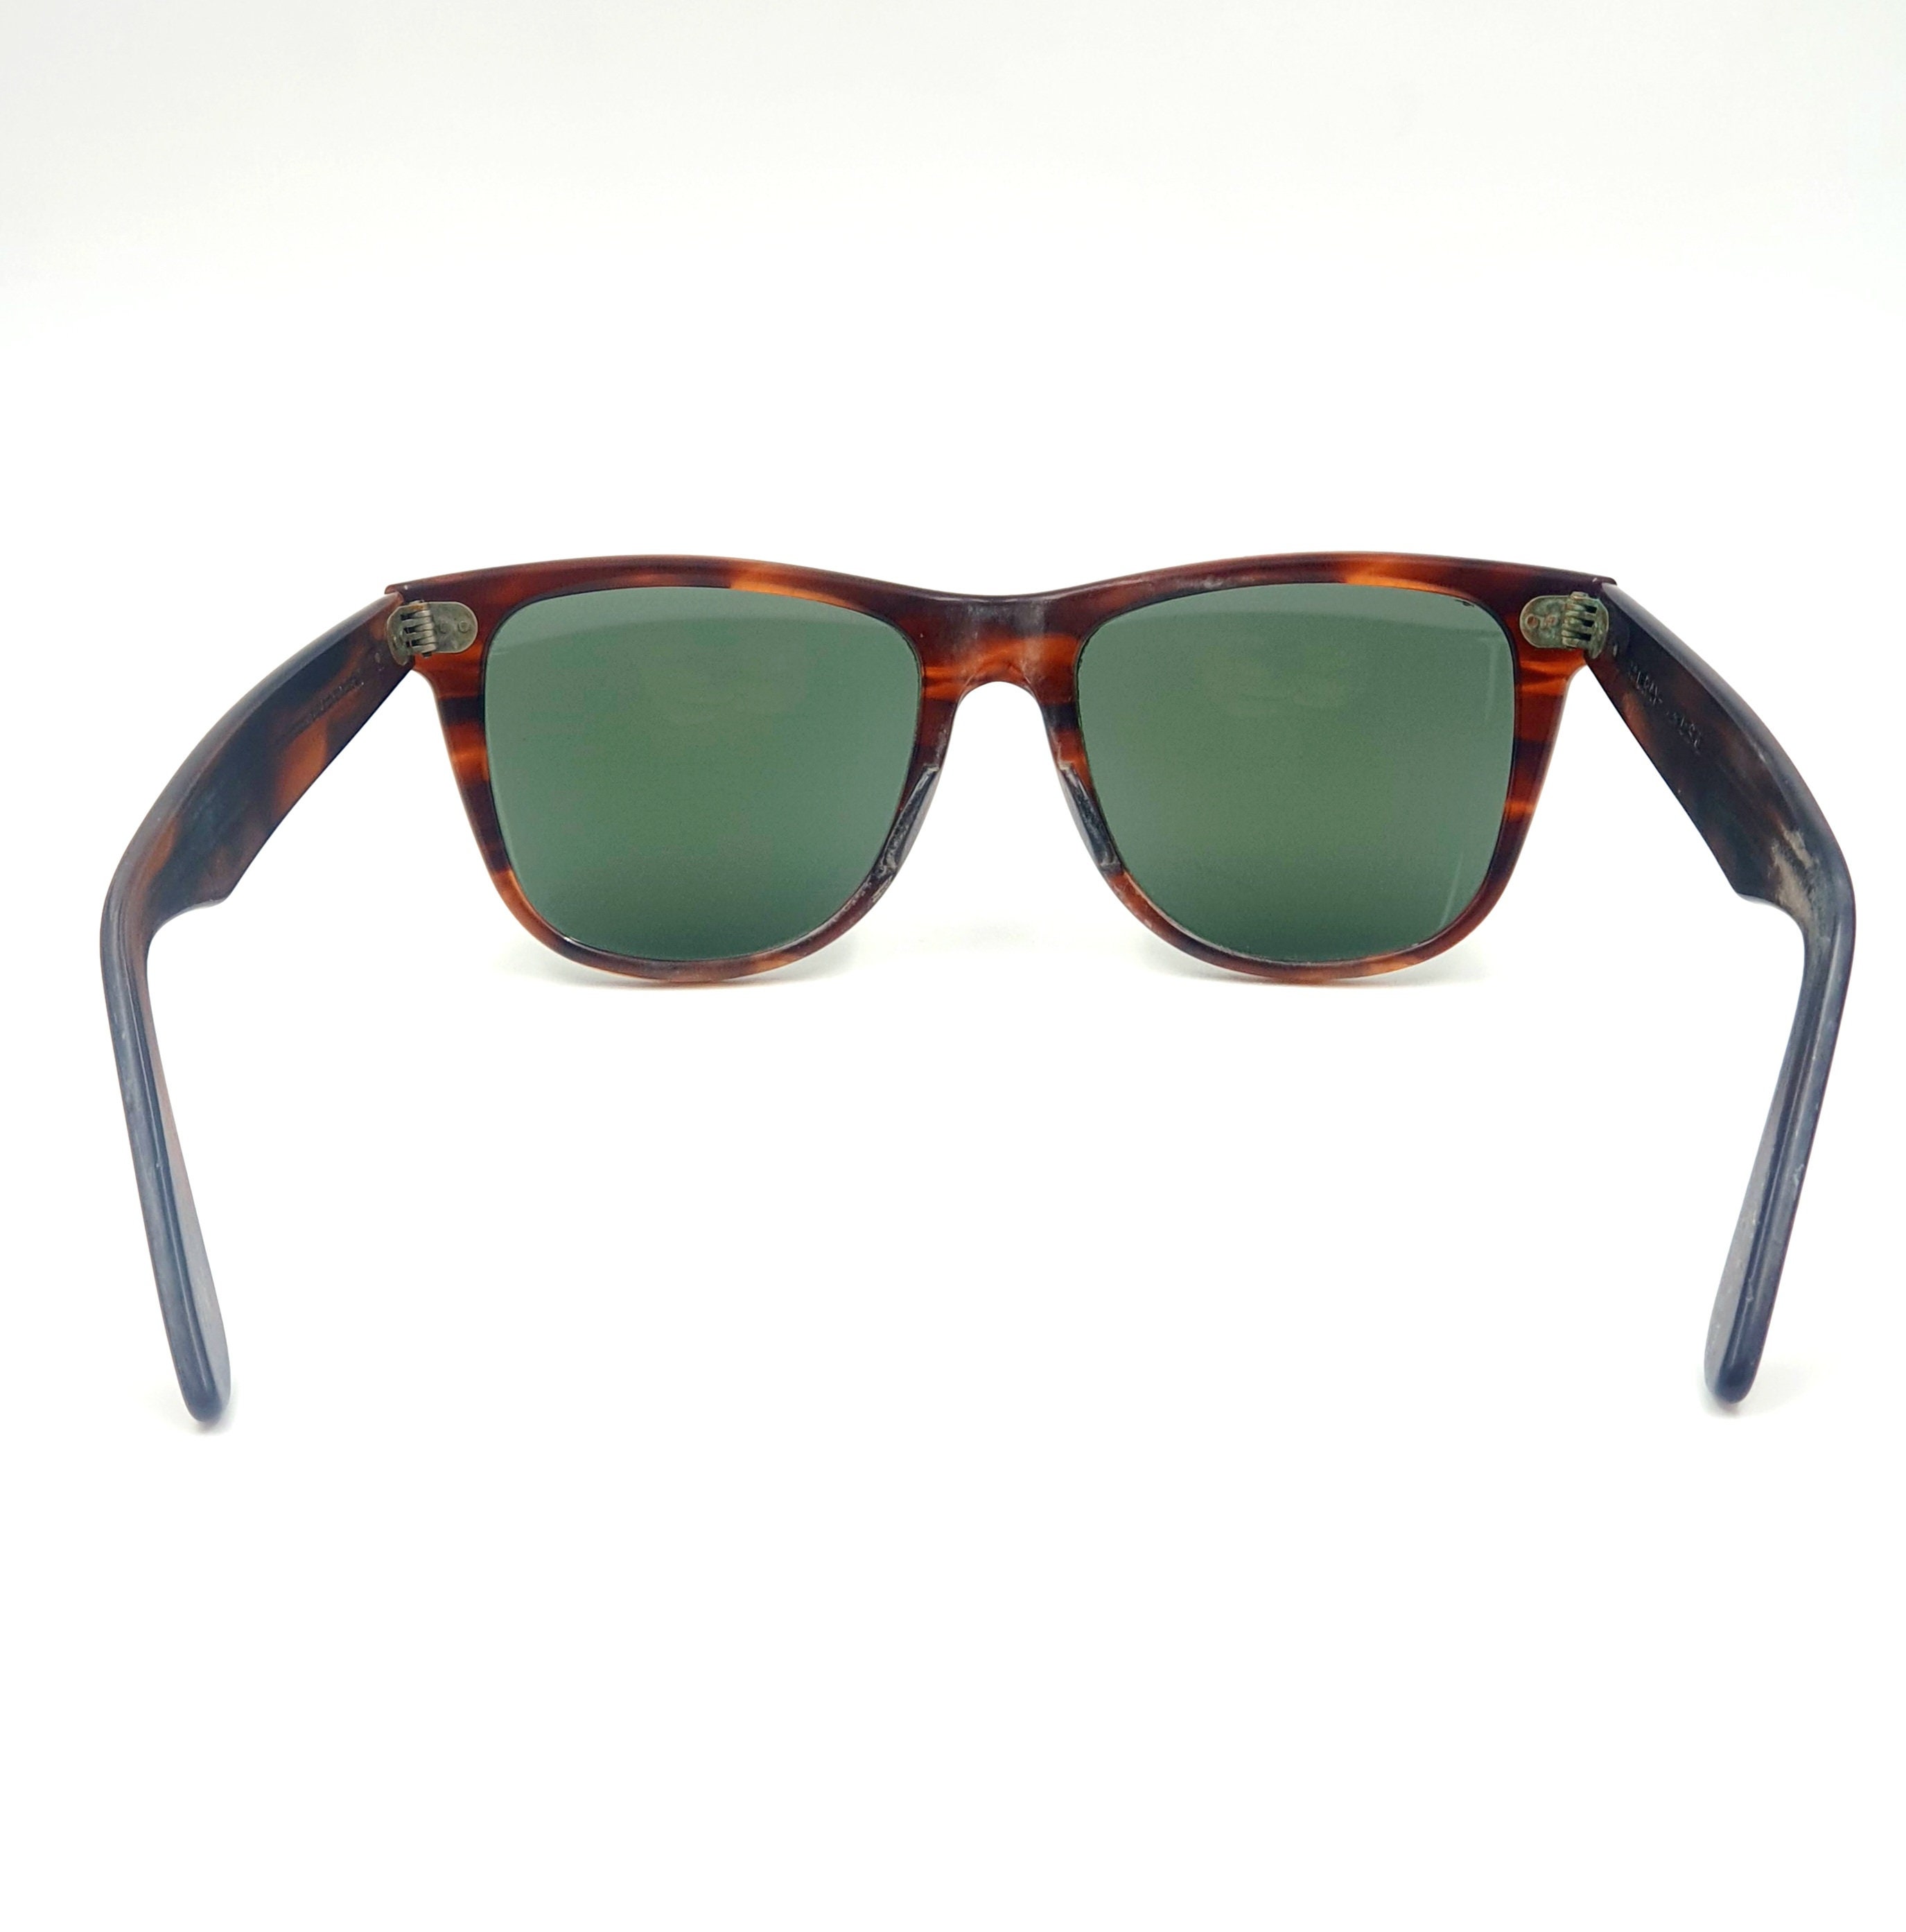 Plys dukke Pjece Se insekter 90s B&L Ray-ban Wayfarer II Sunglasses Unisex Vintage - Etsy